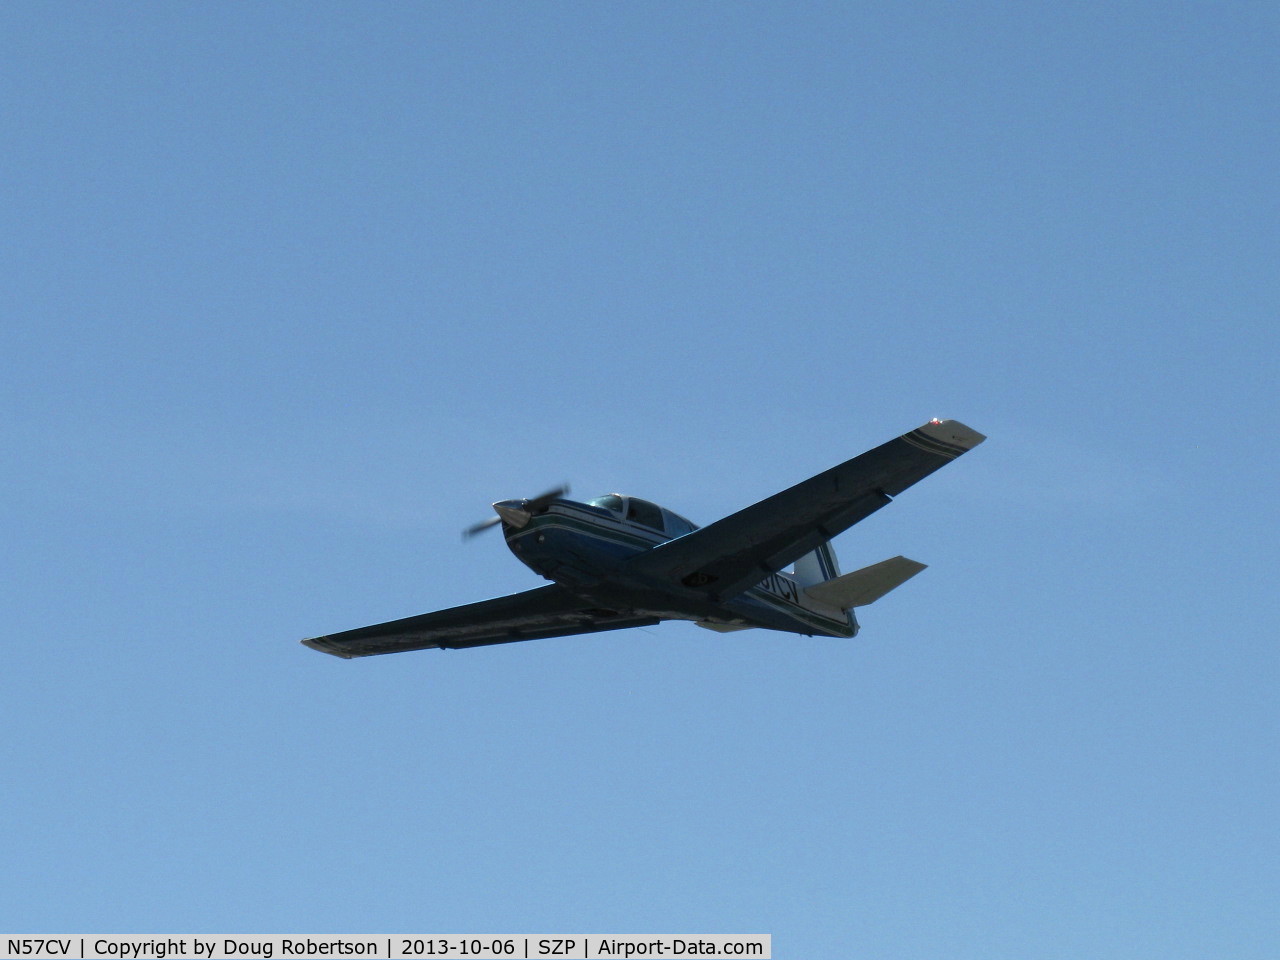 N57CV, 1963 Mooney M20C Ranger C/N 2634, 1963 Mooney M20C, Lycoming O&VO-360 180 Hp, takeoff climb Rwy 04